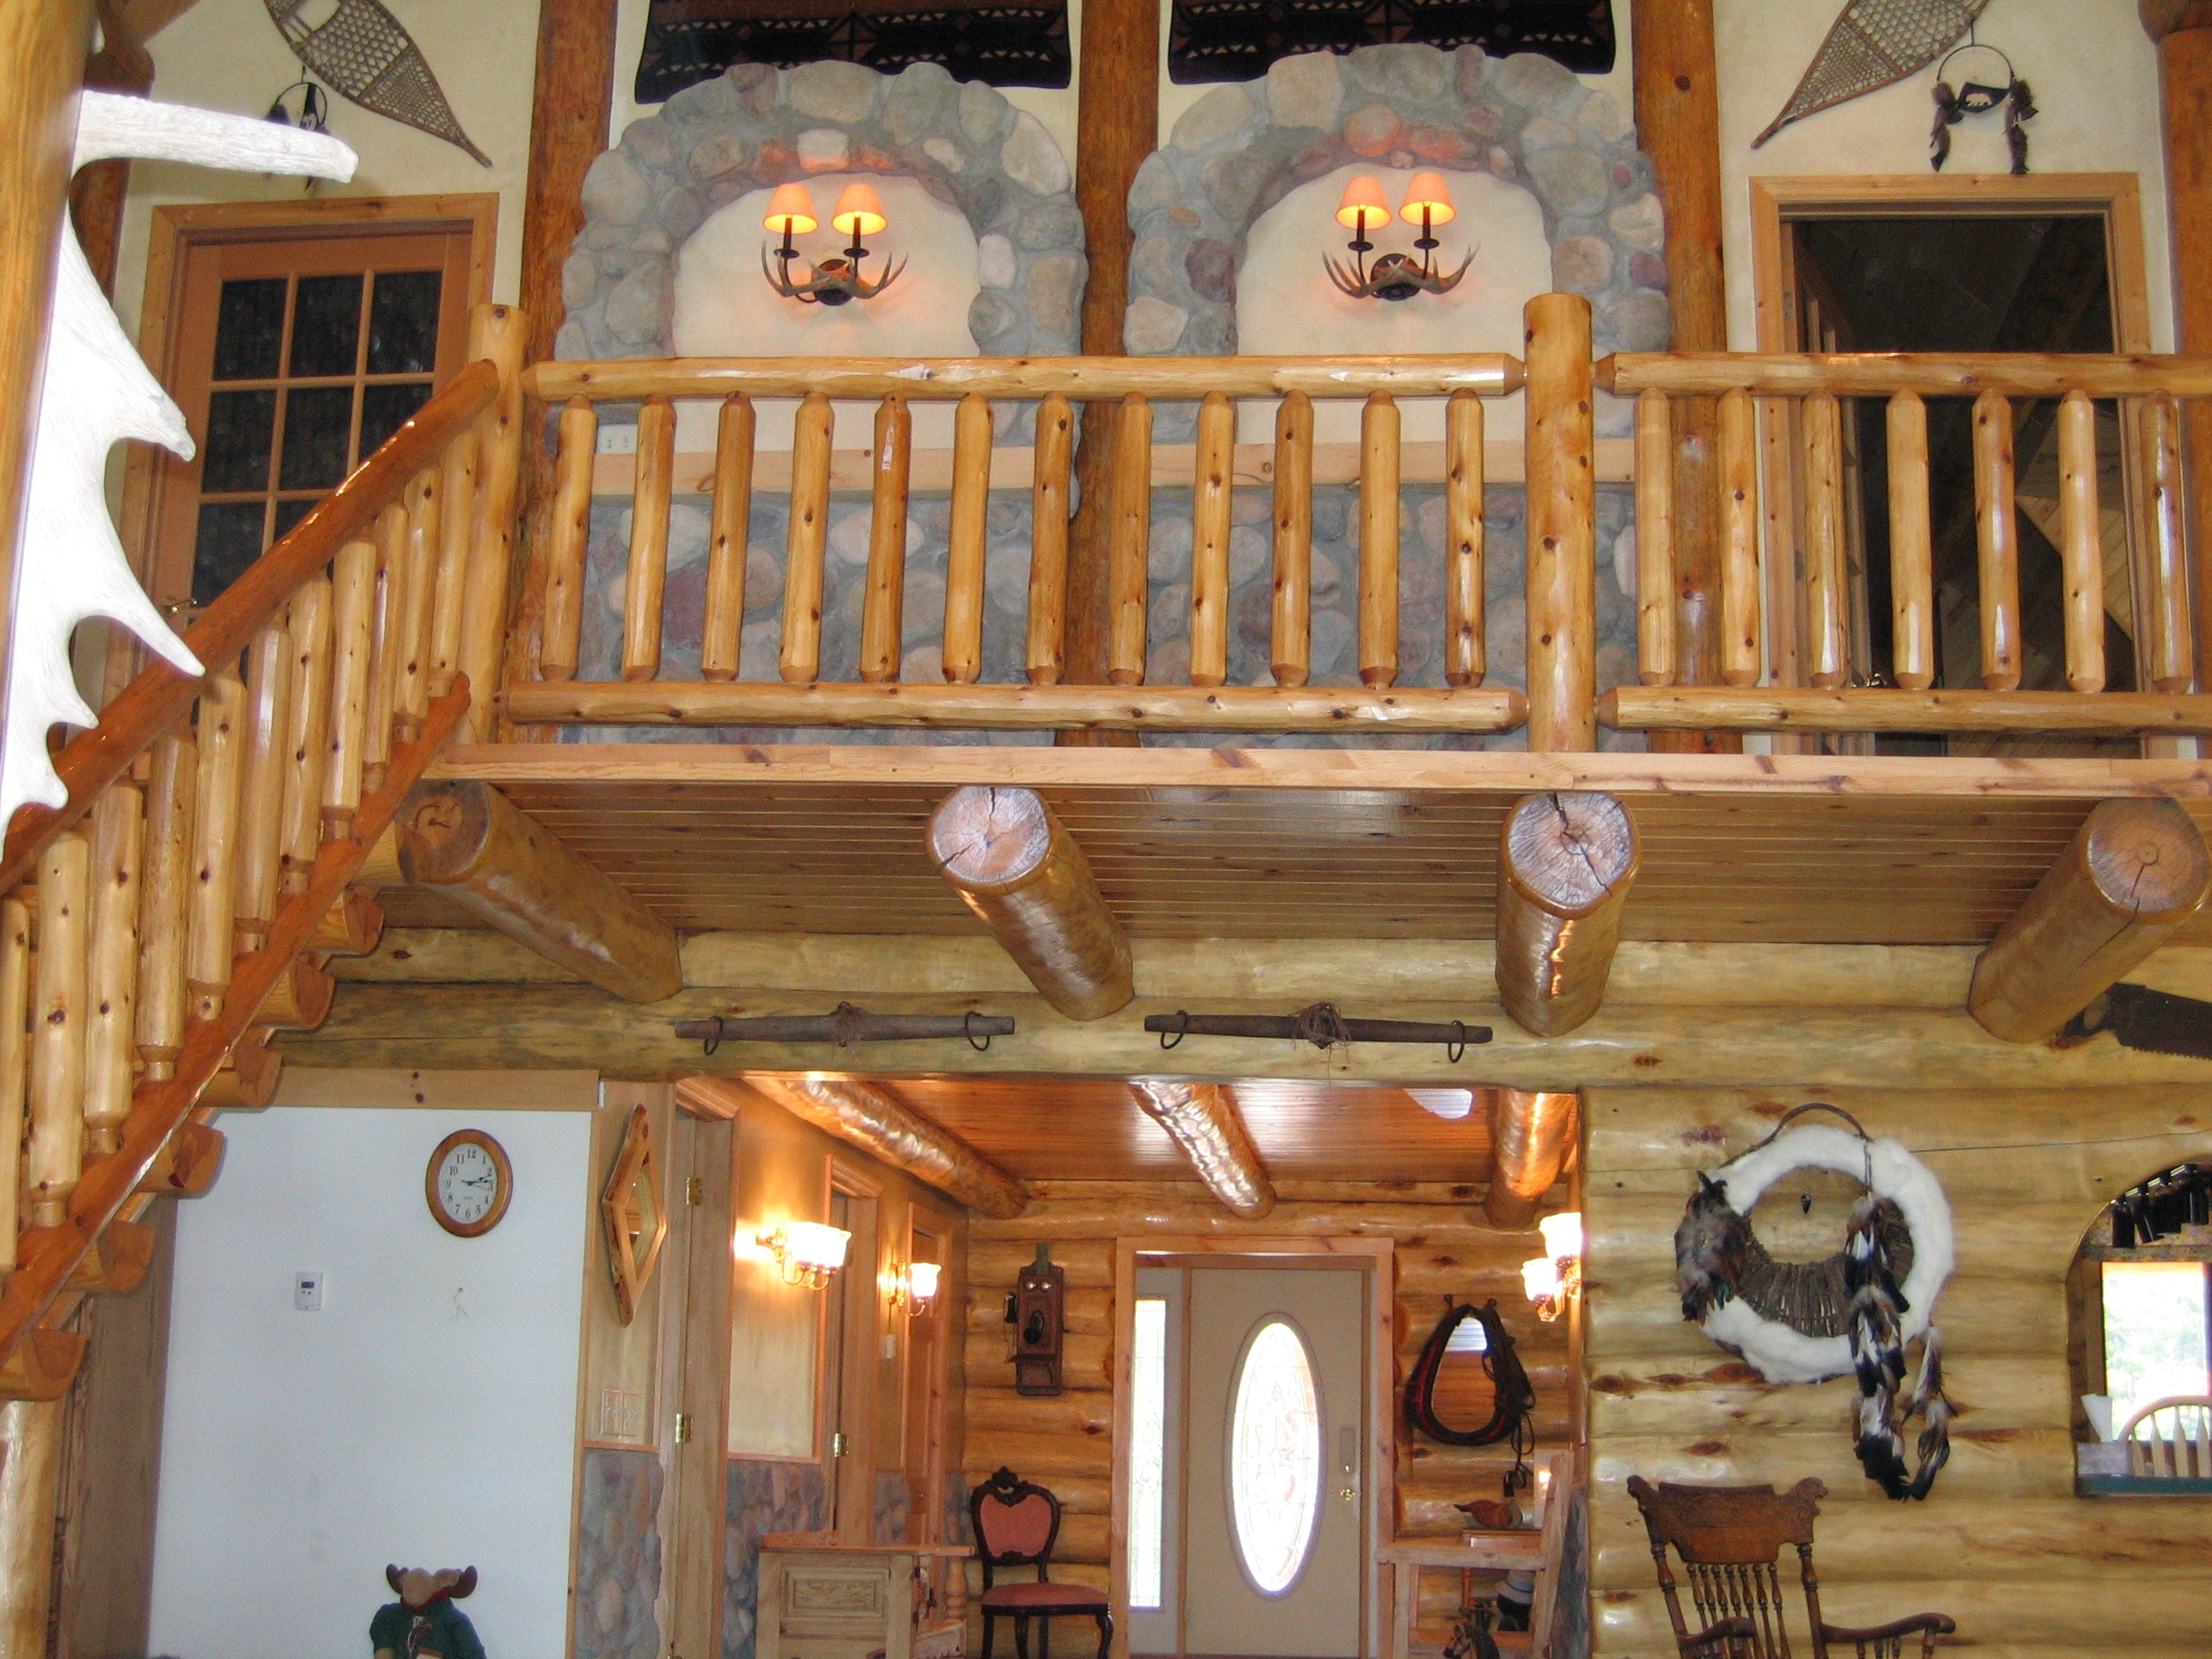 Rustic decor and natural wood railing